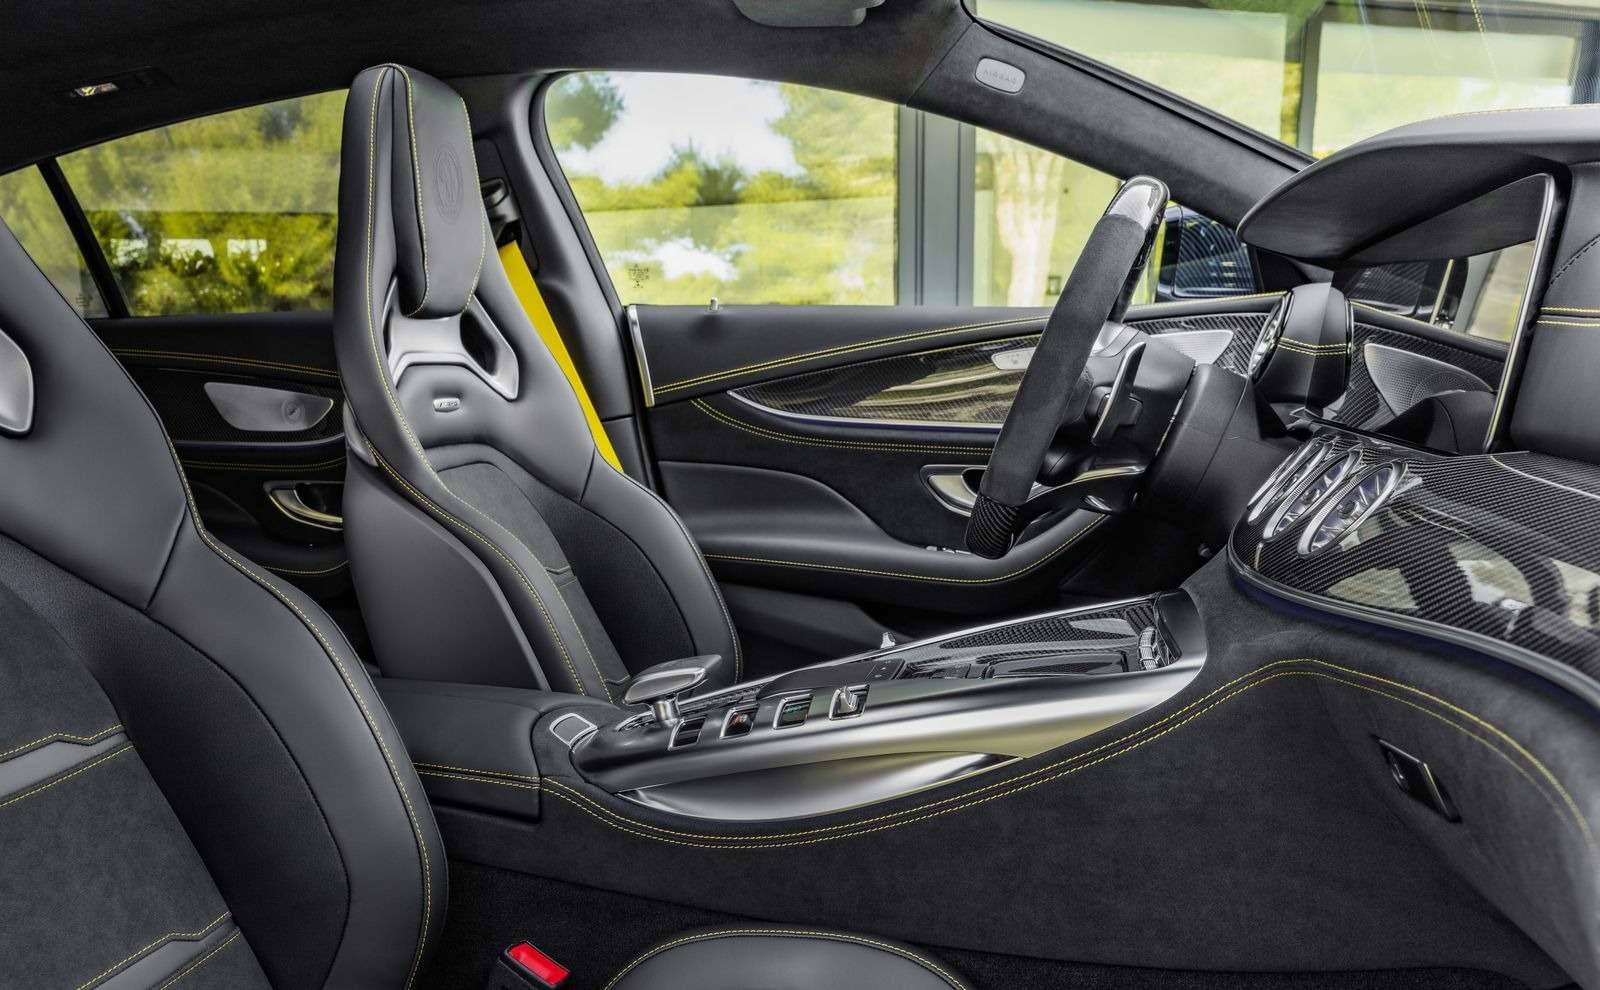 Подмена! Пятидверный Mercedes-AMG GT получил «тележку» Е-класса — фото 851522